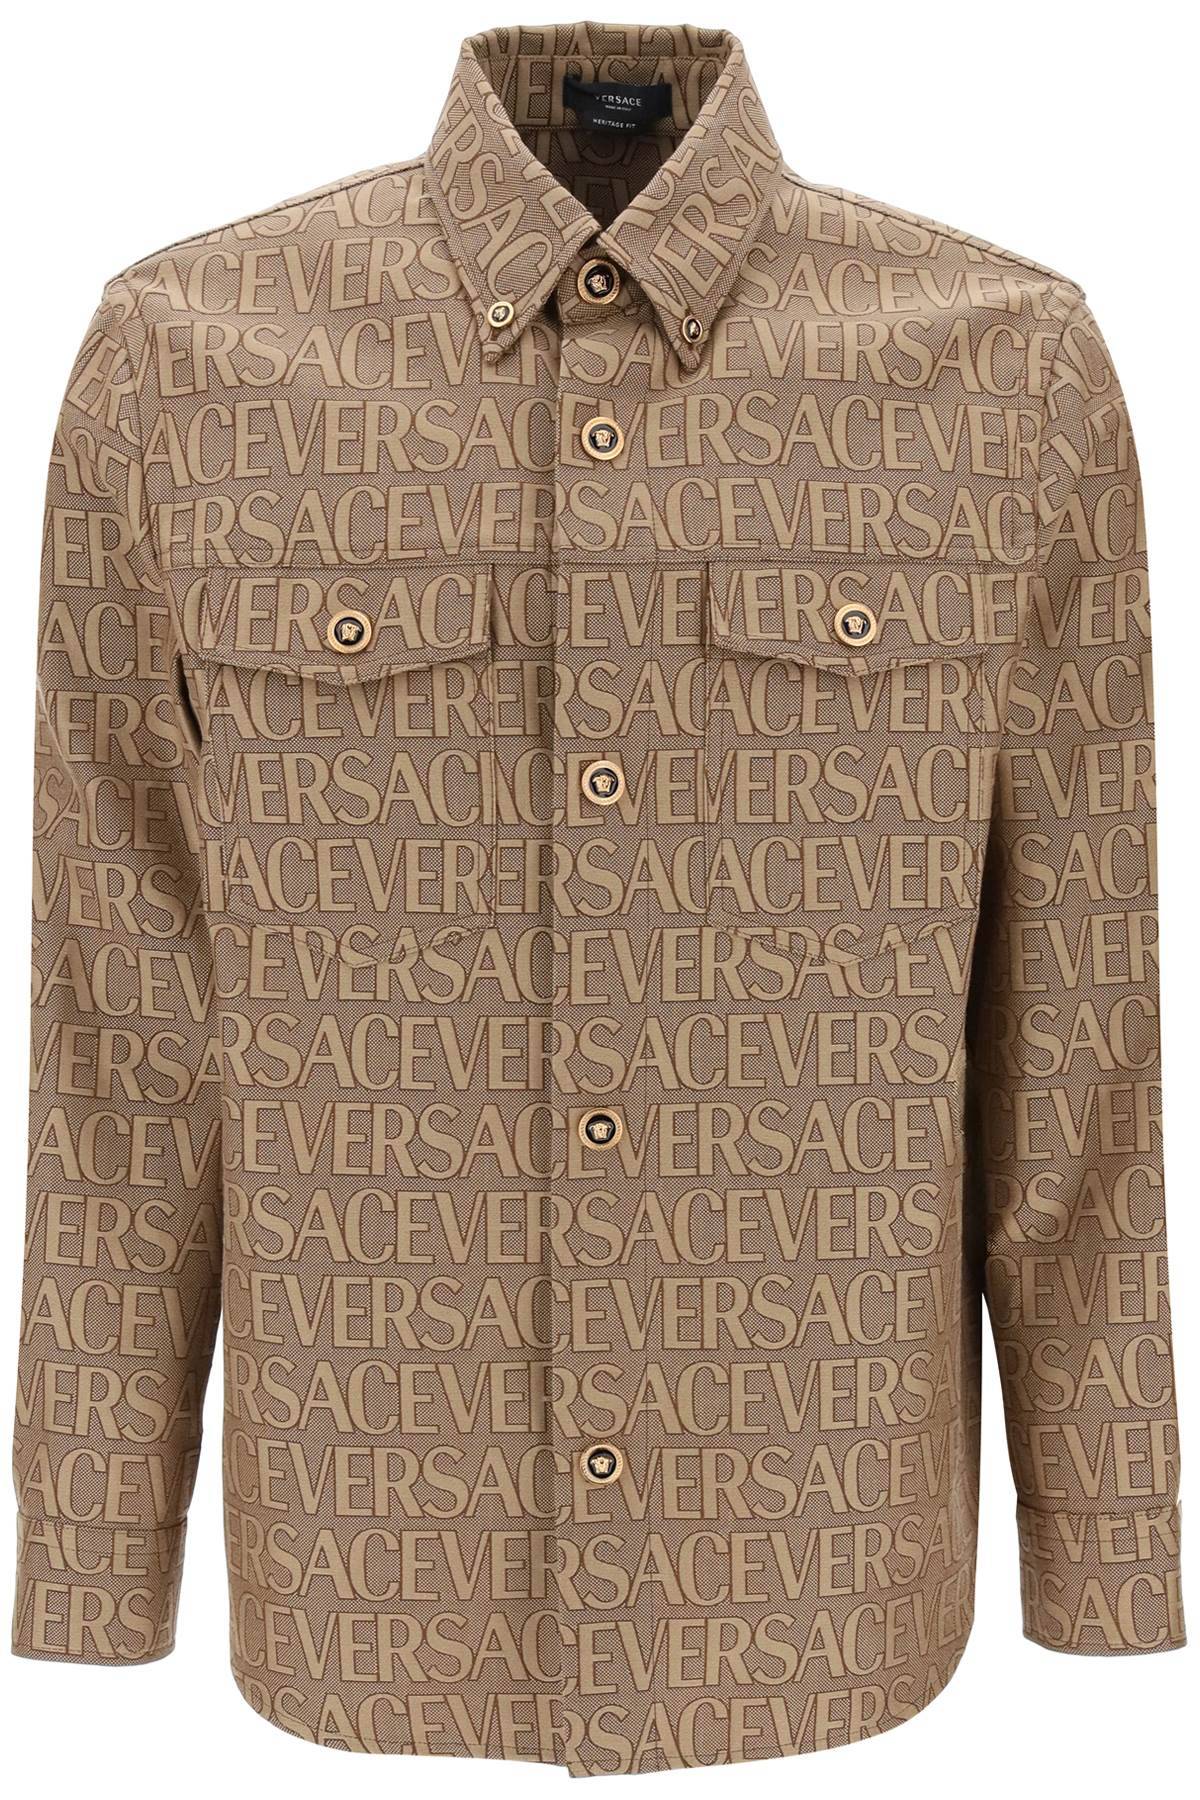 Versace VERSACE versace allover overshirt jacket